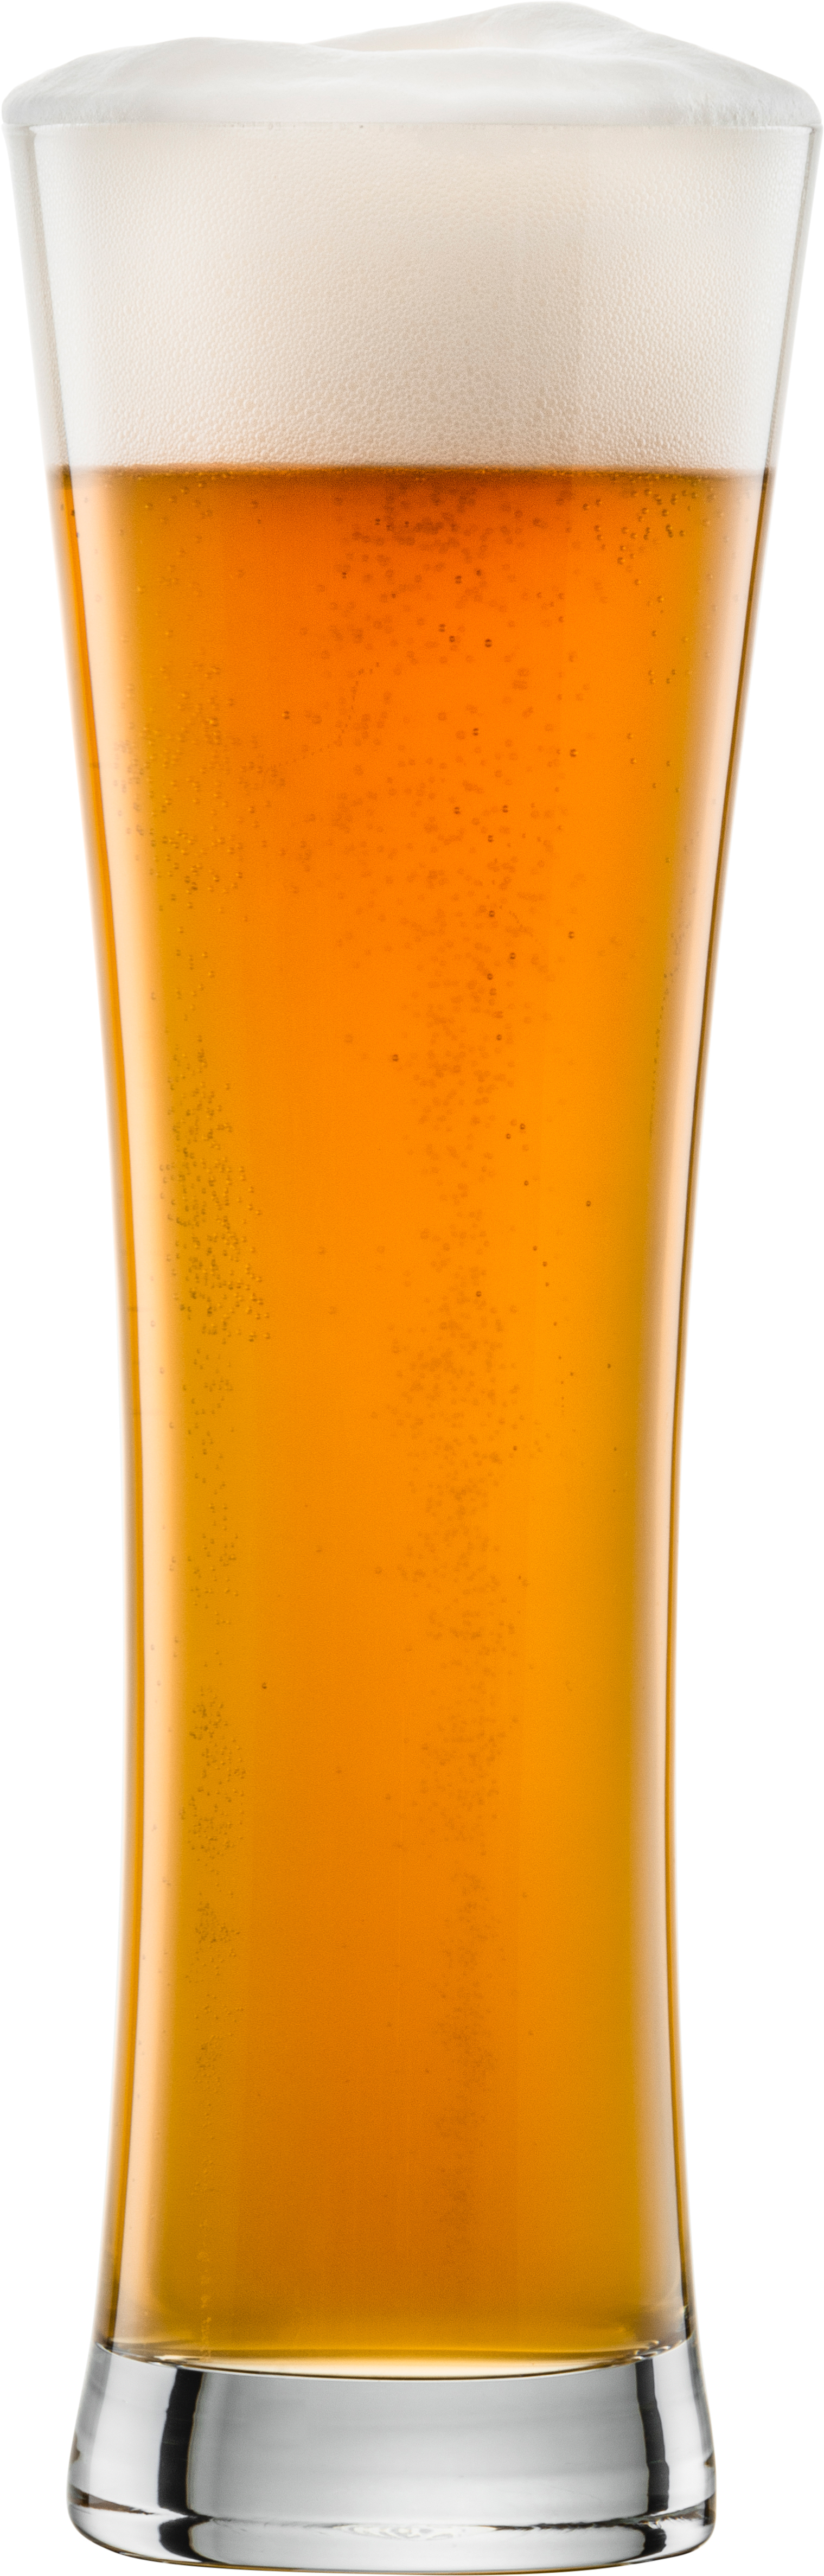 Weizenbierglas 0,5l Beer Basic